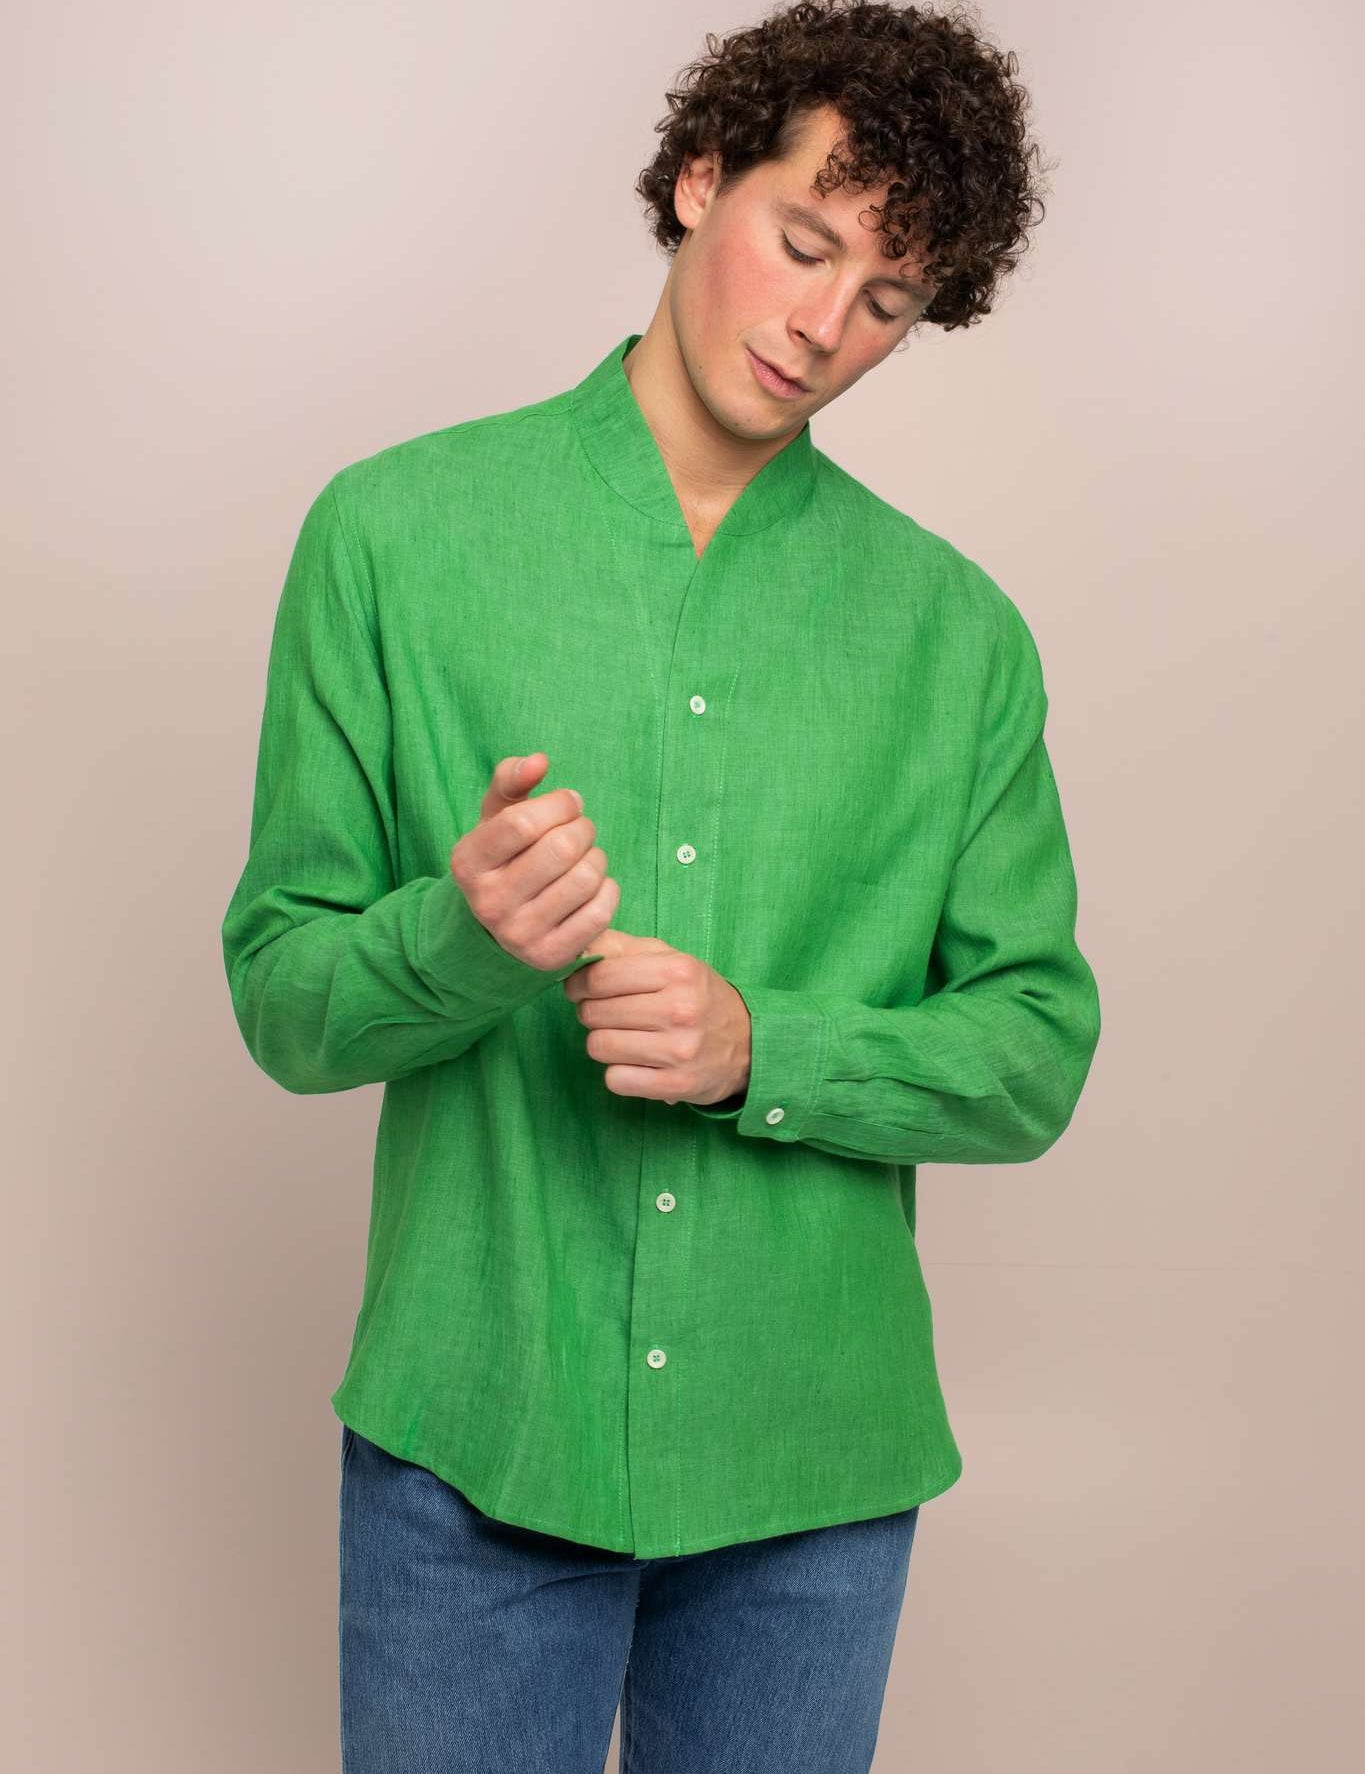 mens-green-linen-shirt-front-view_f3559443-e886-4c13-a0bf-fa0b3cb23211.jpg